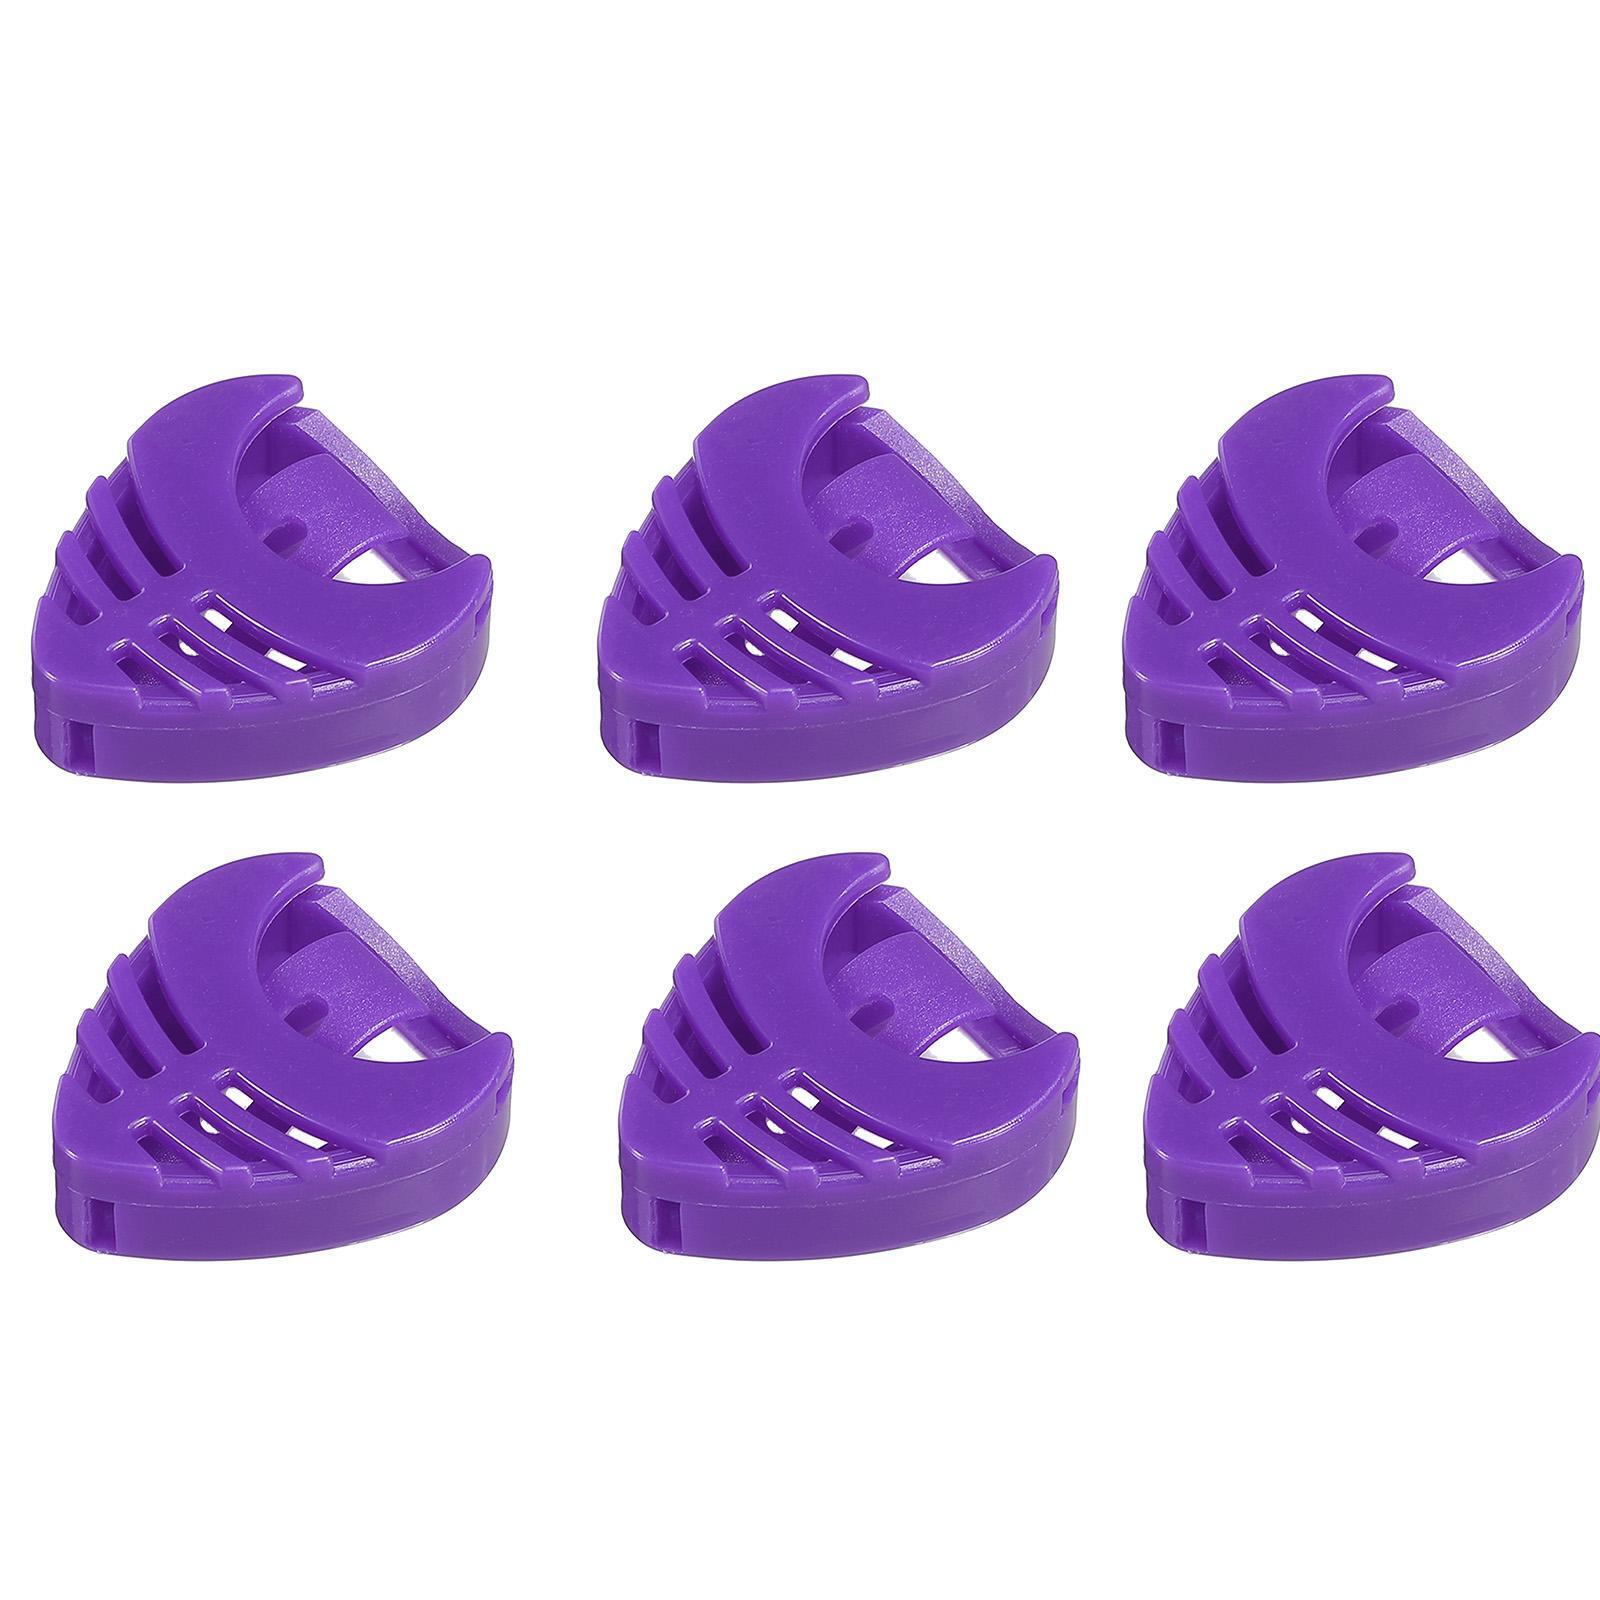 Guitar Pick Holder Plastic Heart-shaped Purple For Guitar, Bass, Ukulele 6pcs